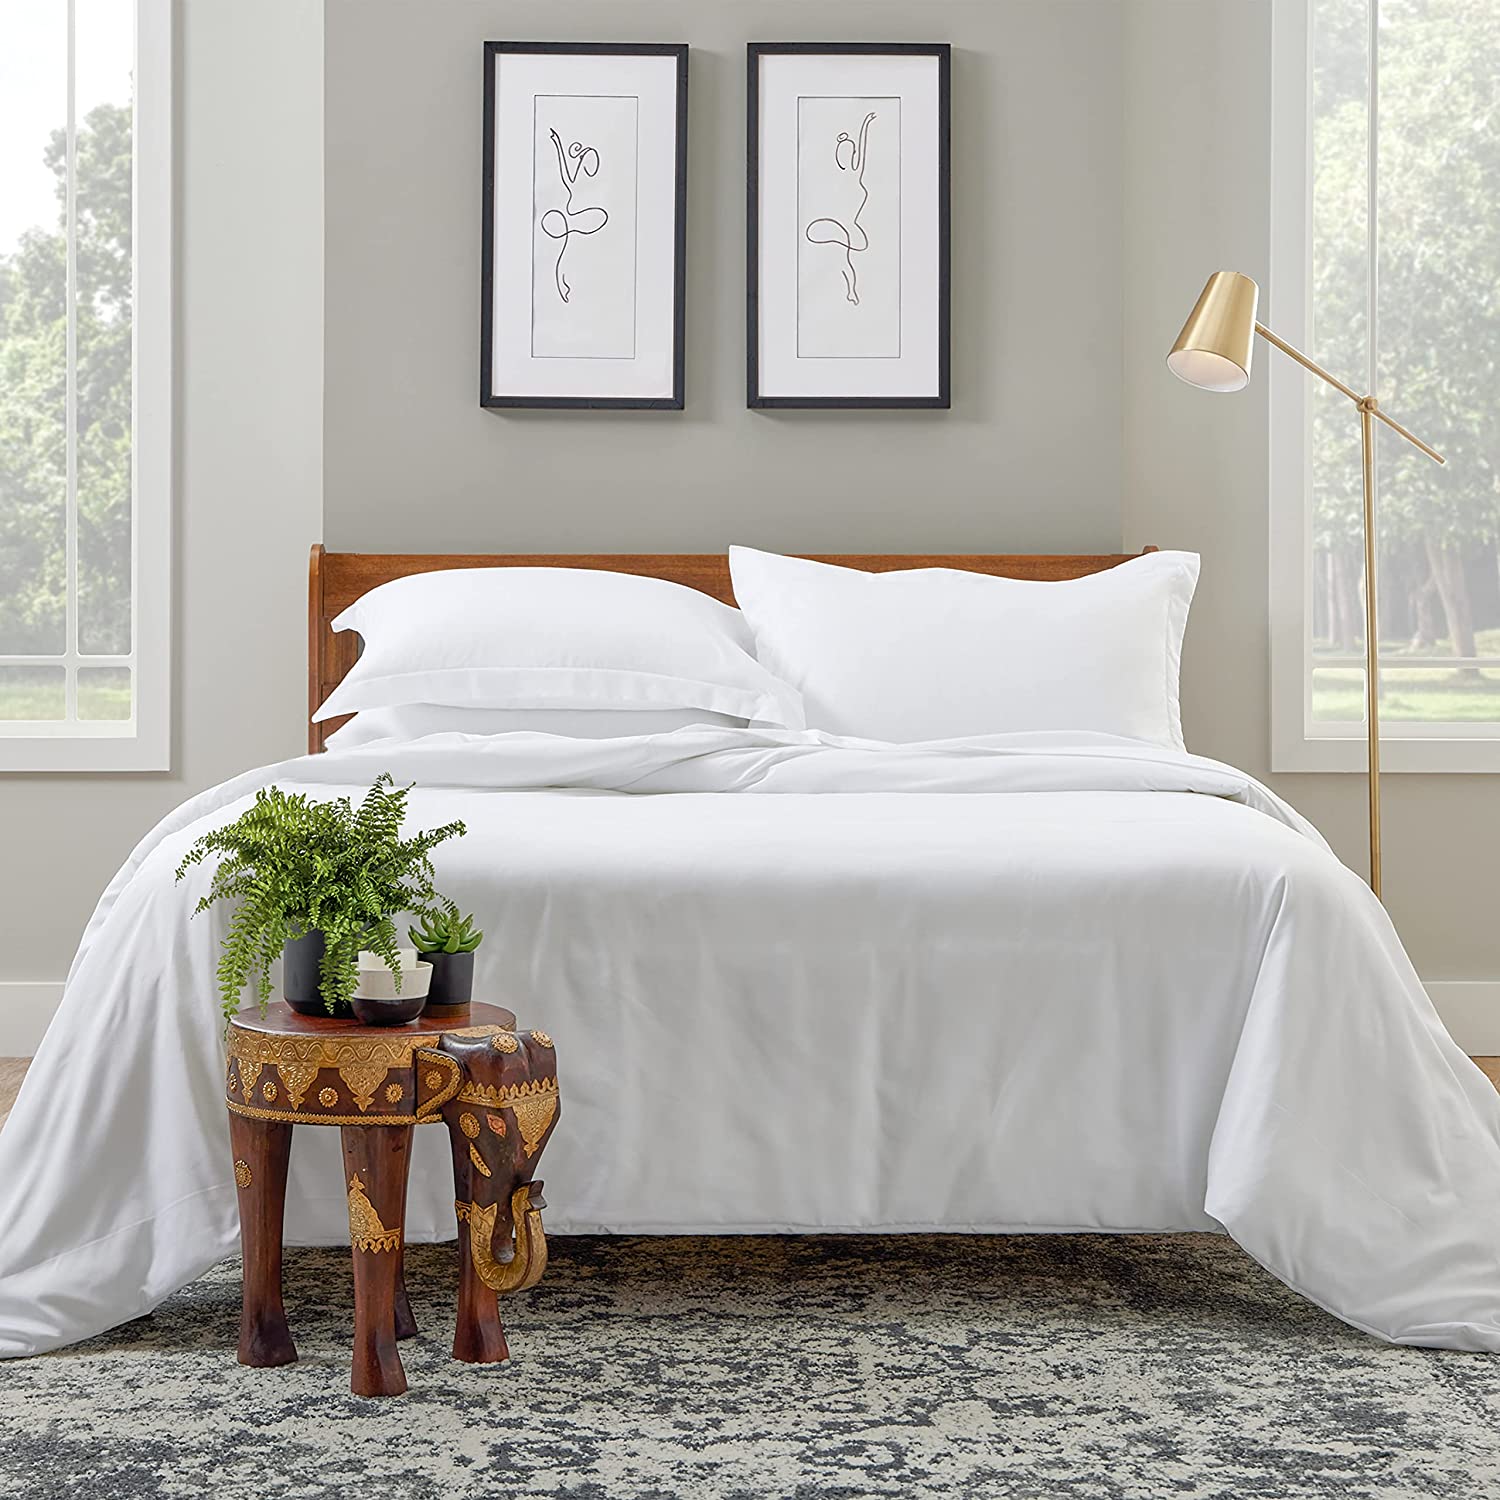 Luxury Duvet Cover Set 3 Piece Blend Ultra Soft Bedding Comforter Protector e kenyelletsa 2 Pillow Shams